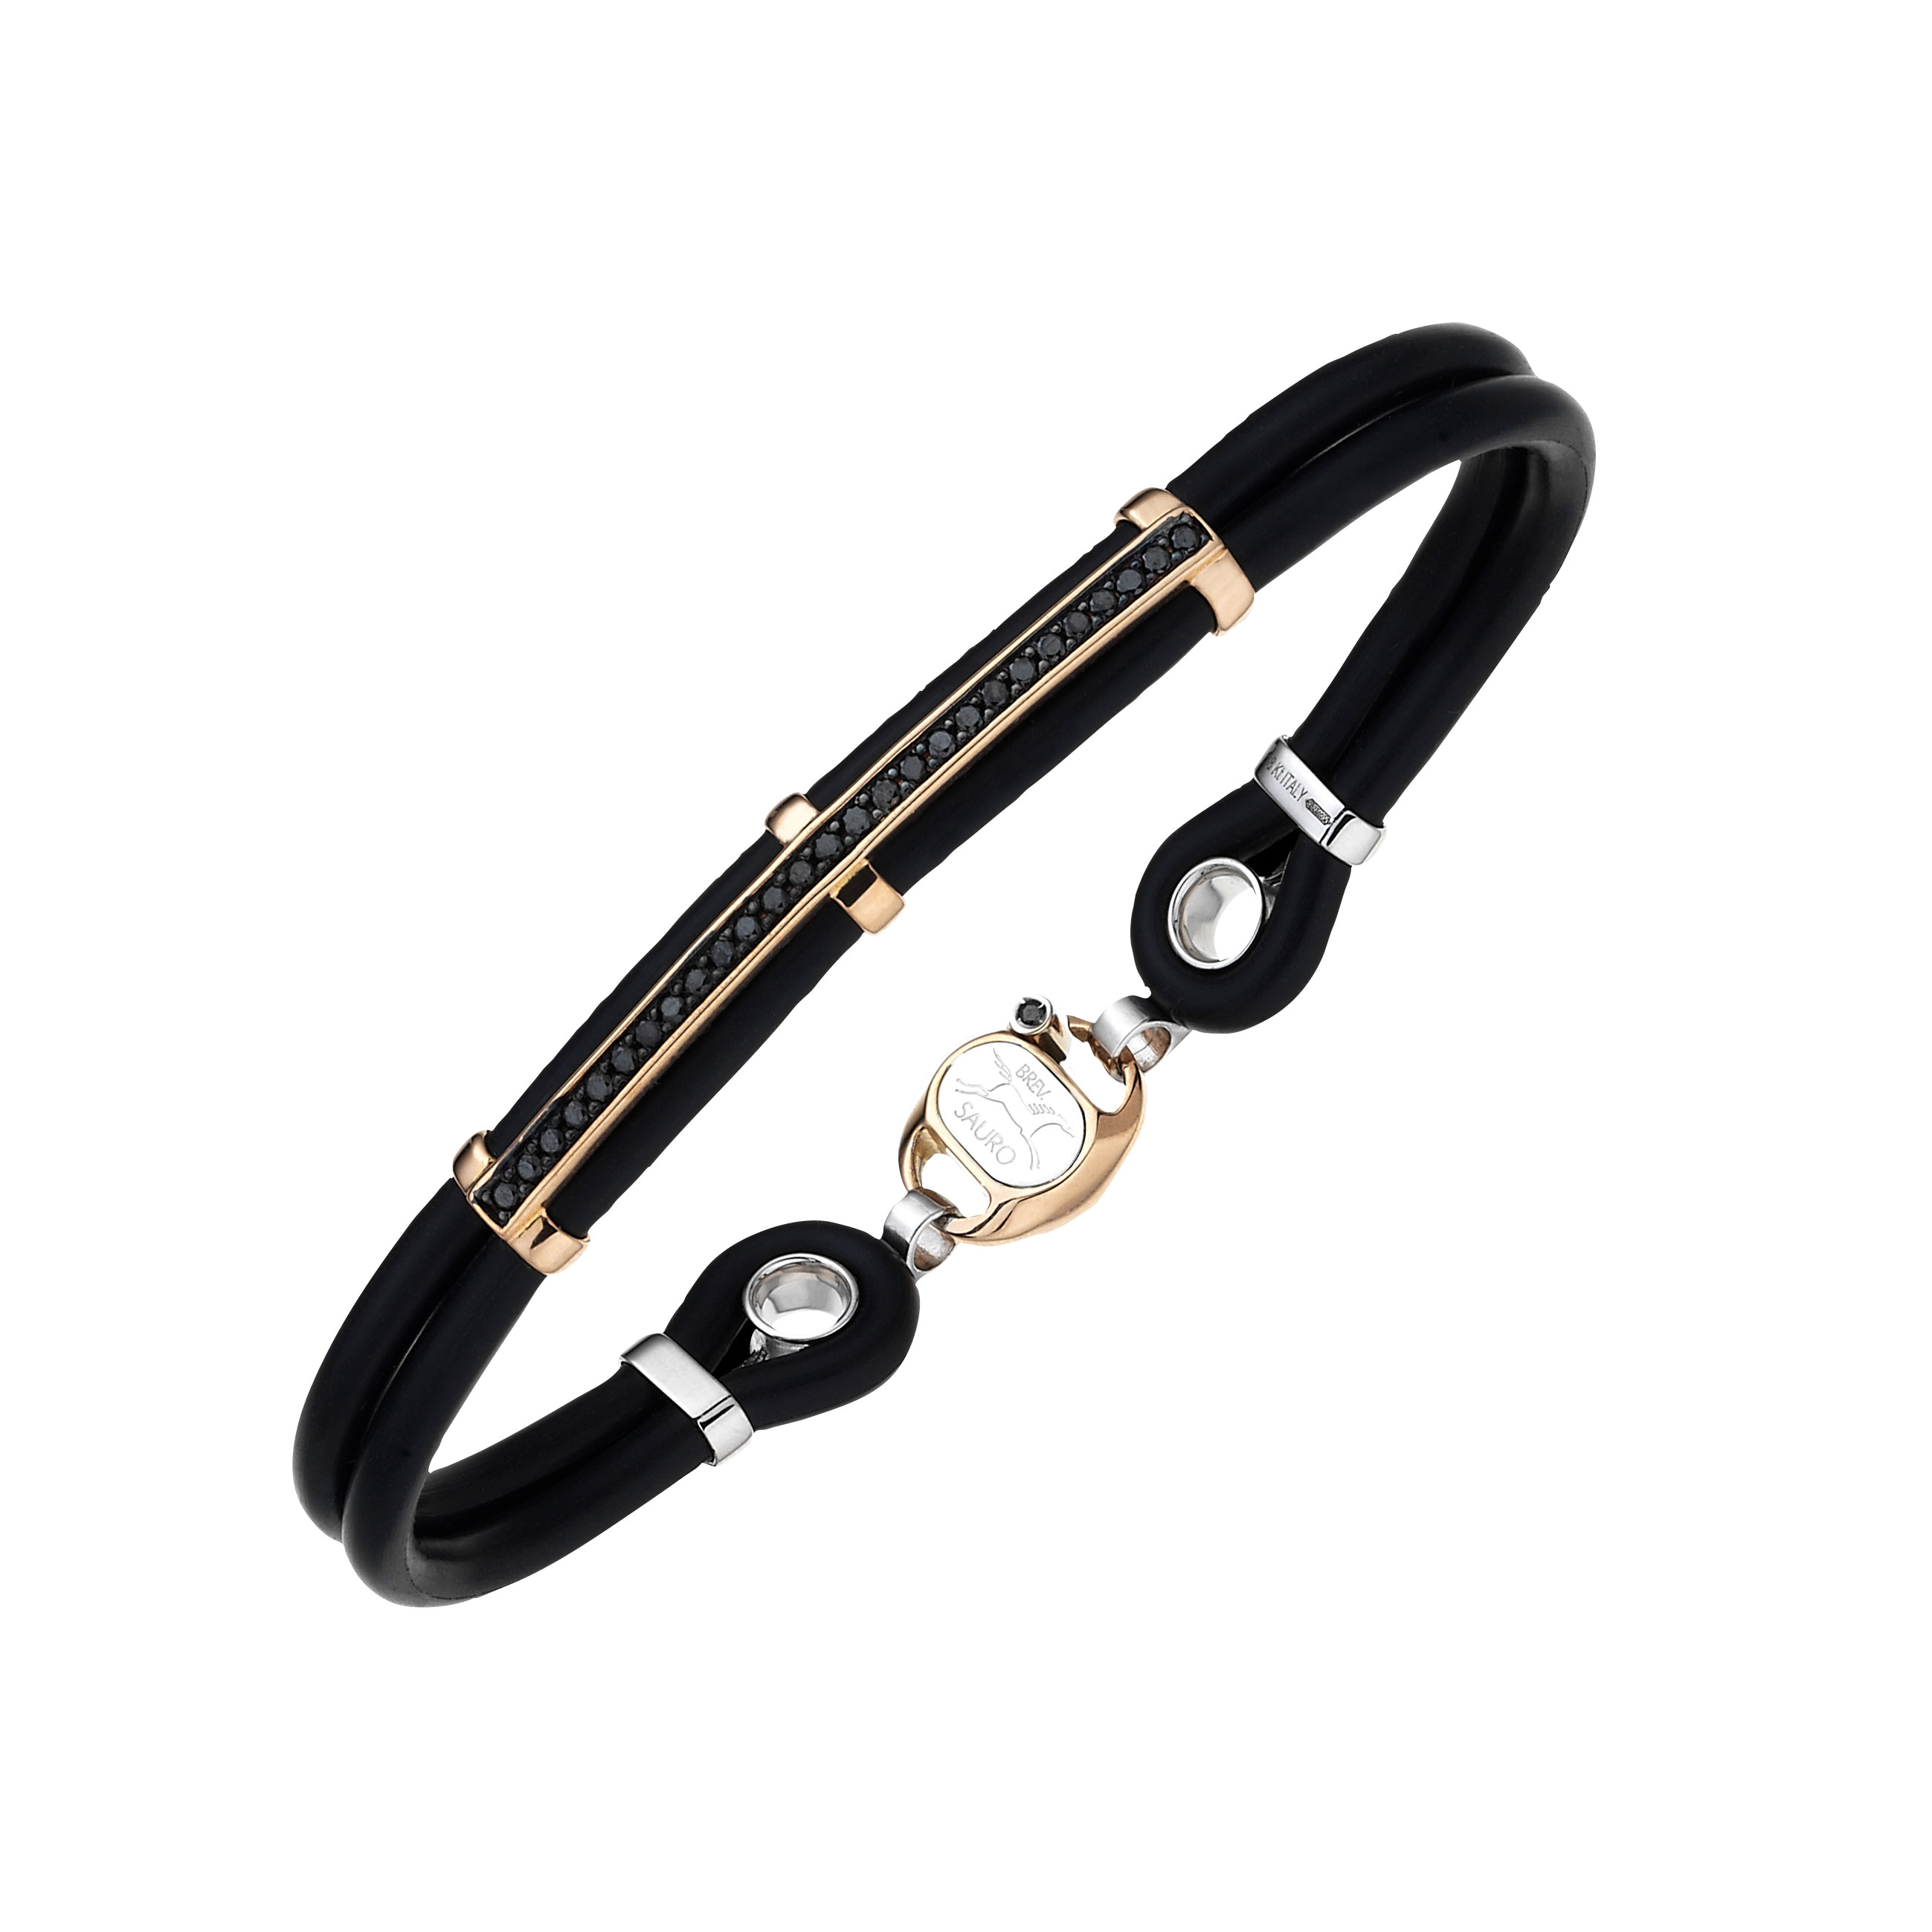 Black Cuff Bracelet | Gold Cuff Bracelet | Priceless Beads